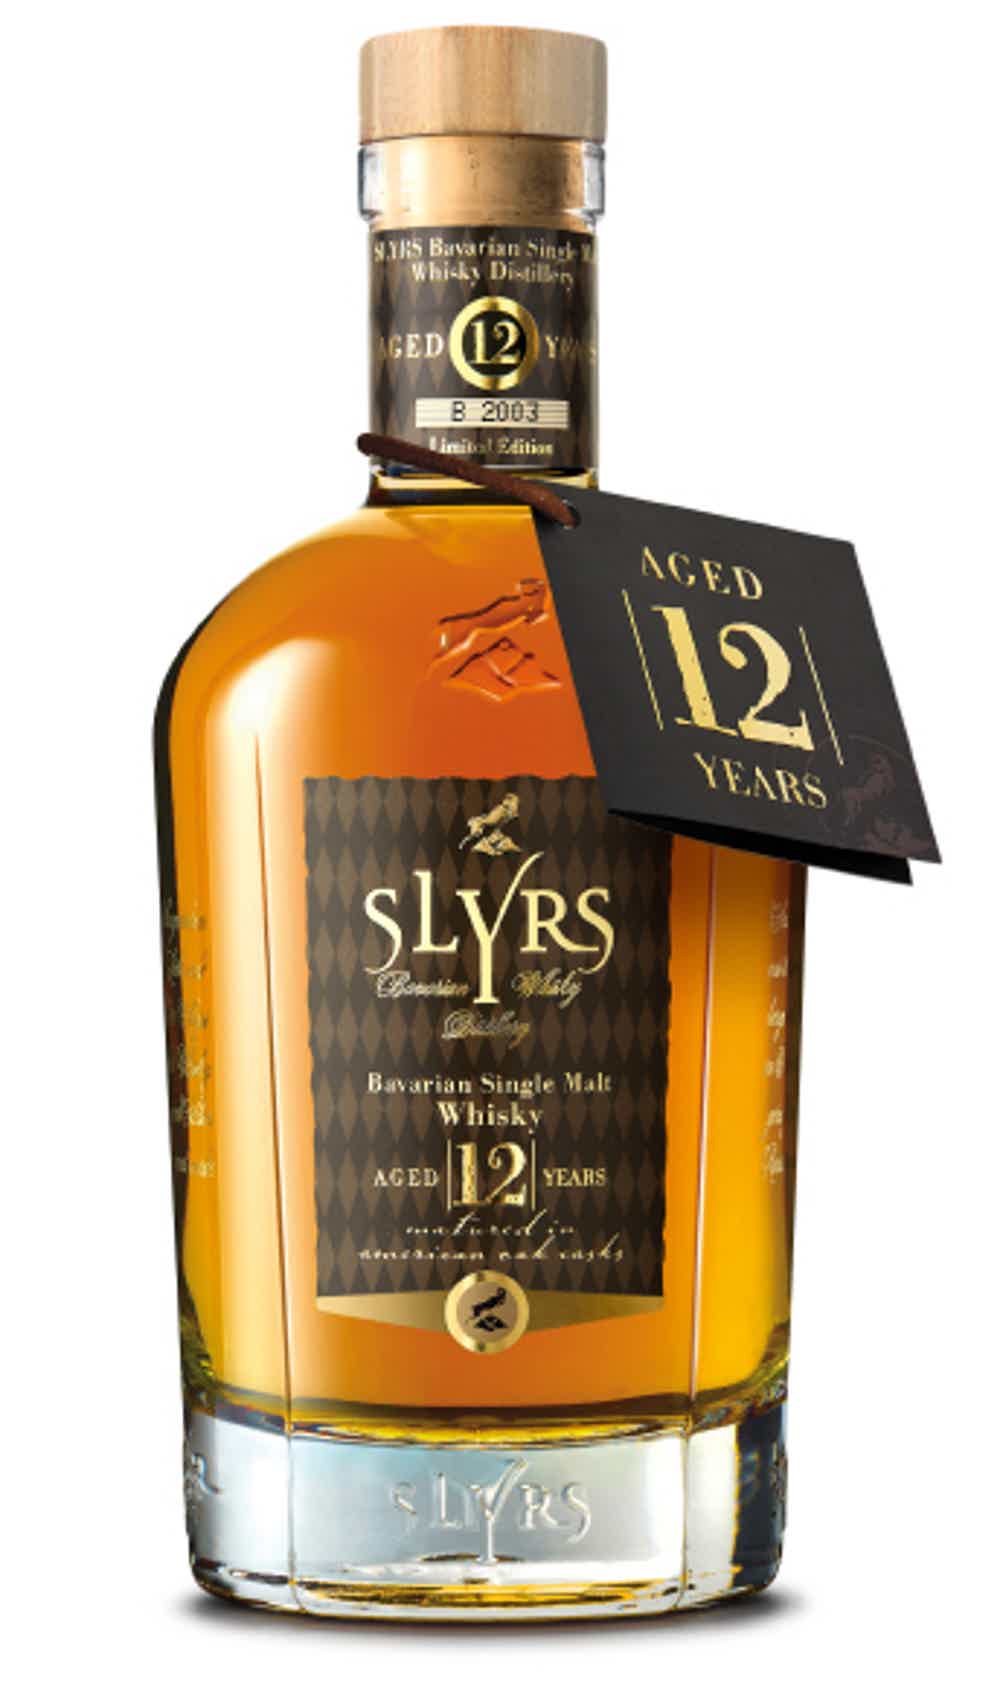 SLYRS Single Malt Whisky Aged 12 Years 43% vol. 43.0% 0.35L, Spirits